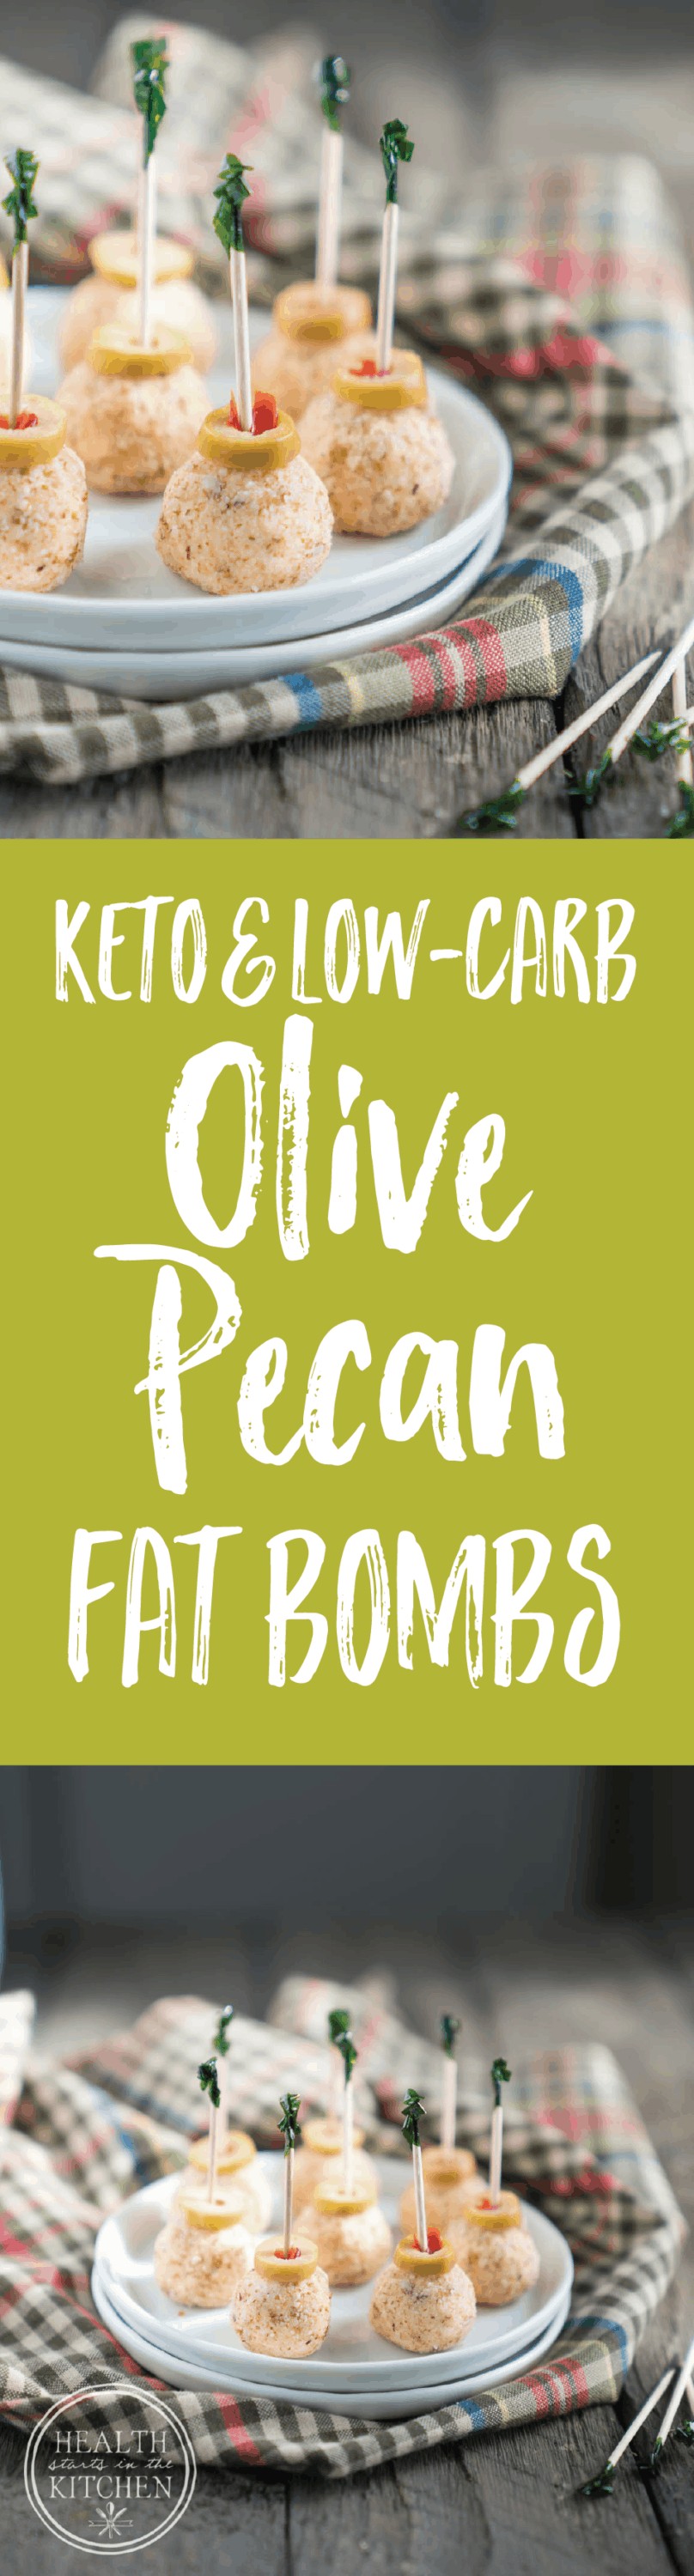 Keto Olive Pecan Fat Bombs